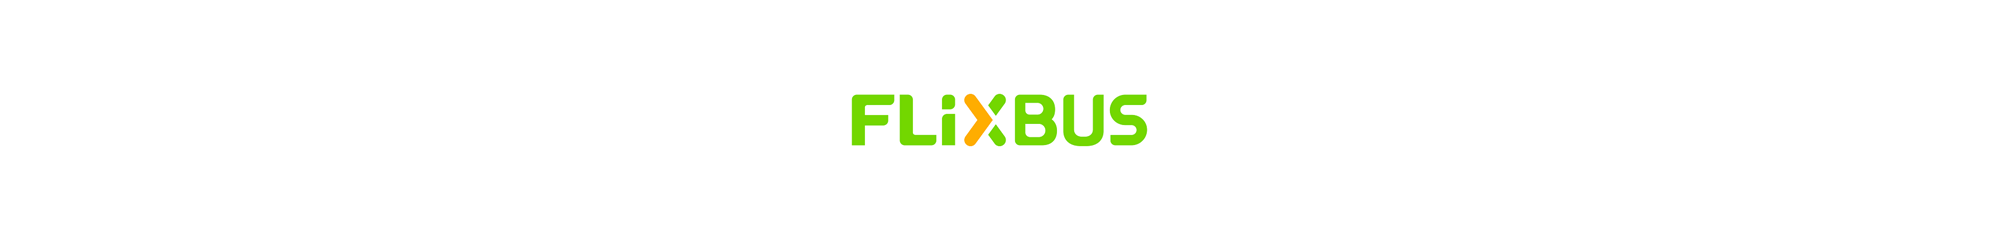 FLIXBUS logo